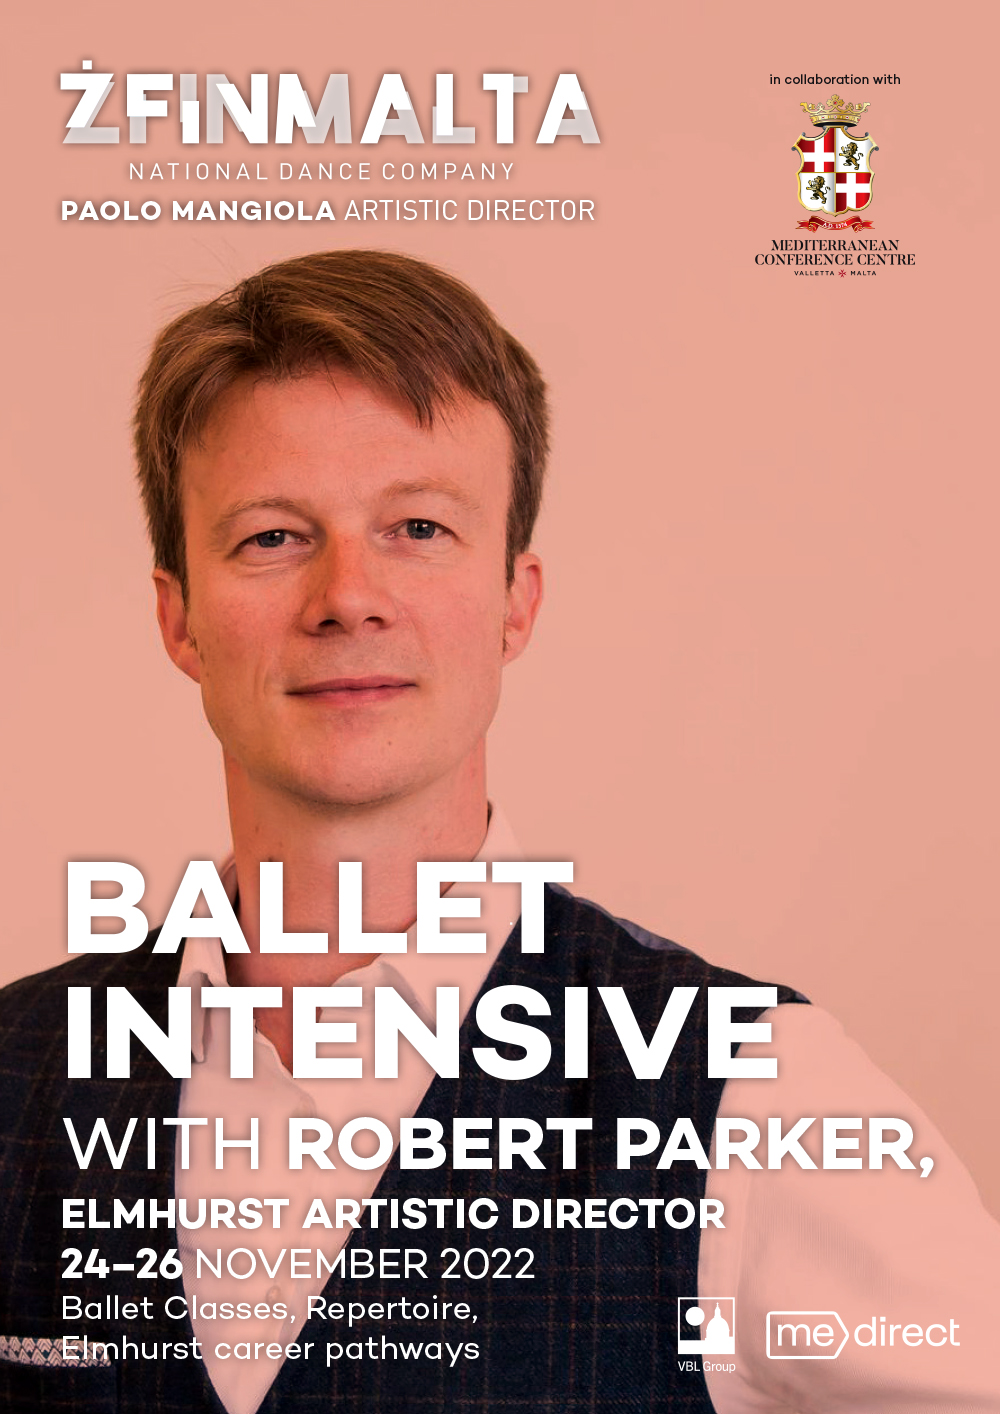 ŻfinMalta's ballet intensive with Robert Parker